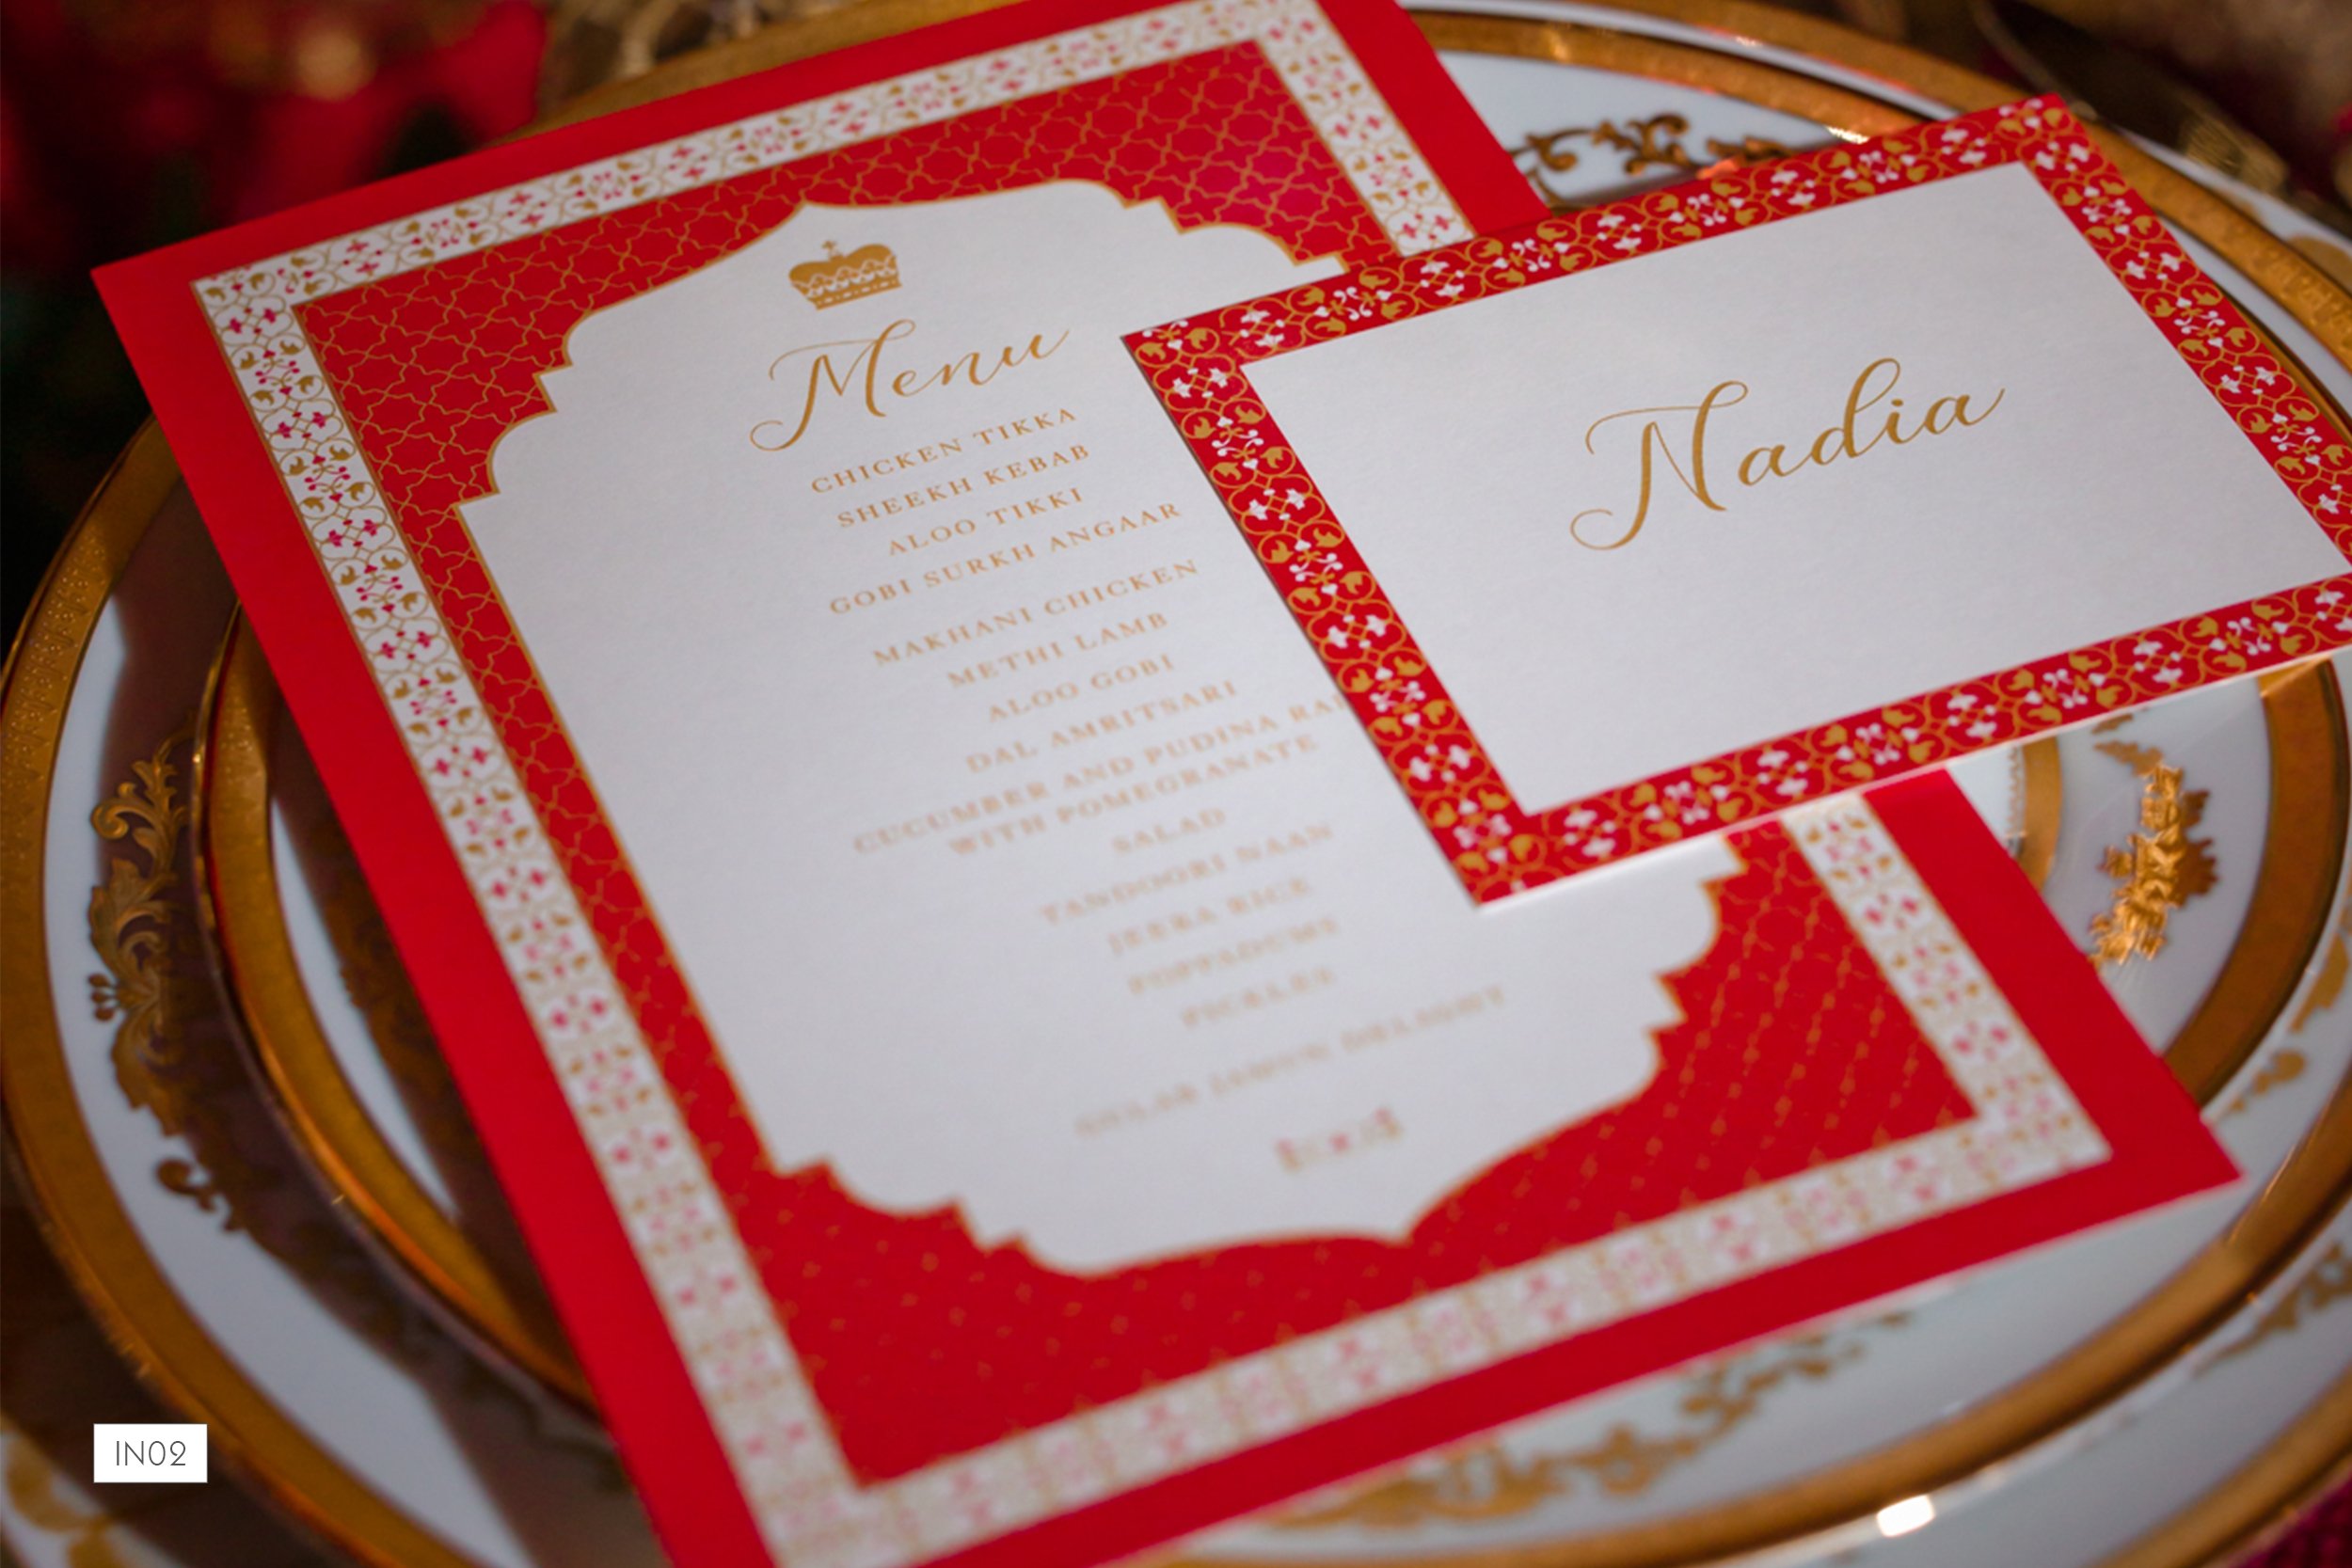 Muslim-Nikah-menu-placecard-wedding-invitation_Kensington-Palace-IN02_ananyacards.com.jpg